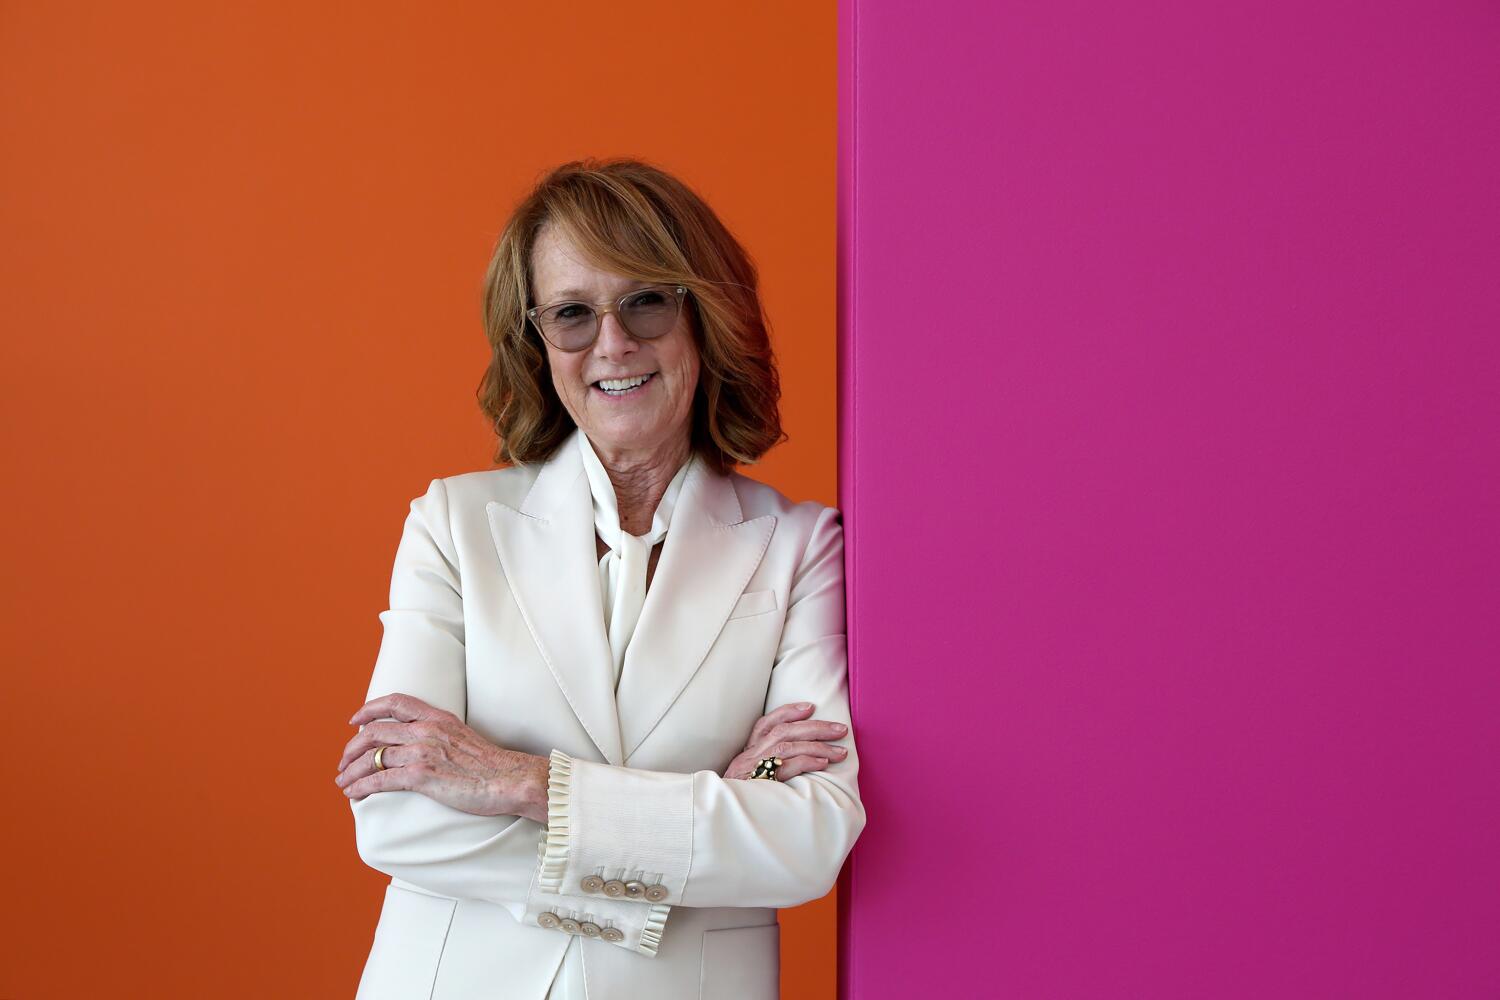 In blow to L.A. art scene, Hammer Museum director Ann Philbin to retire in 2024